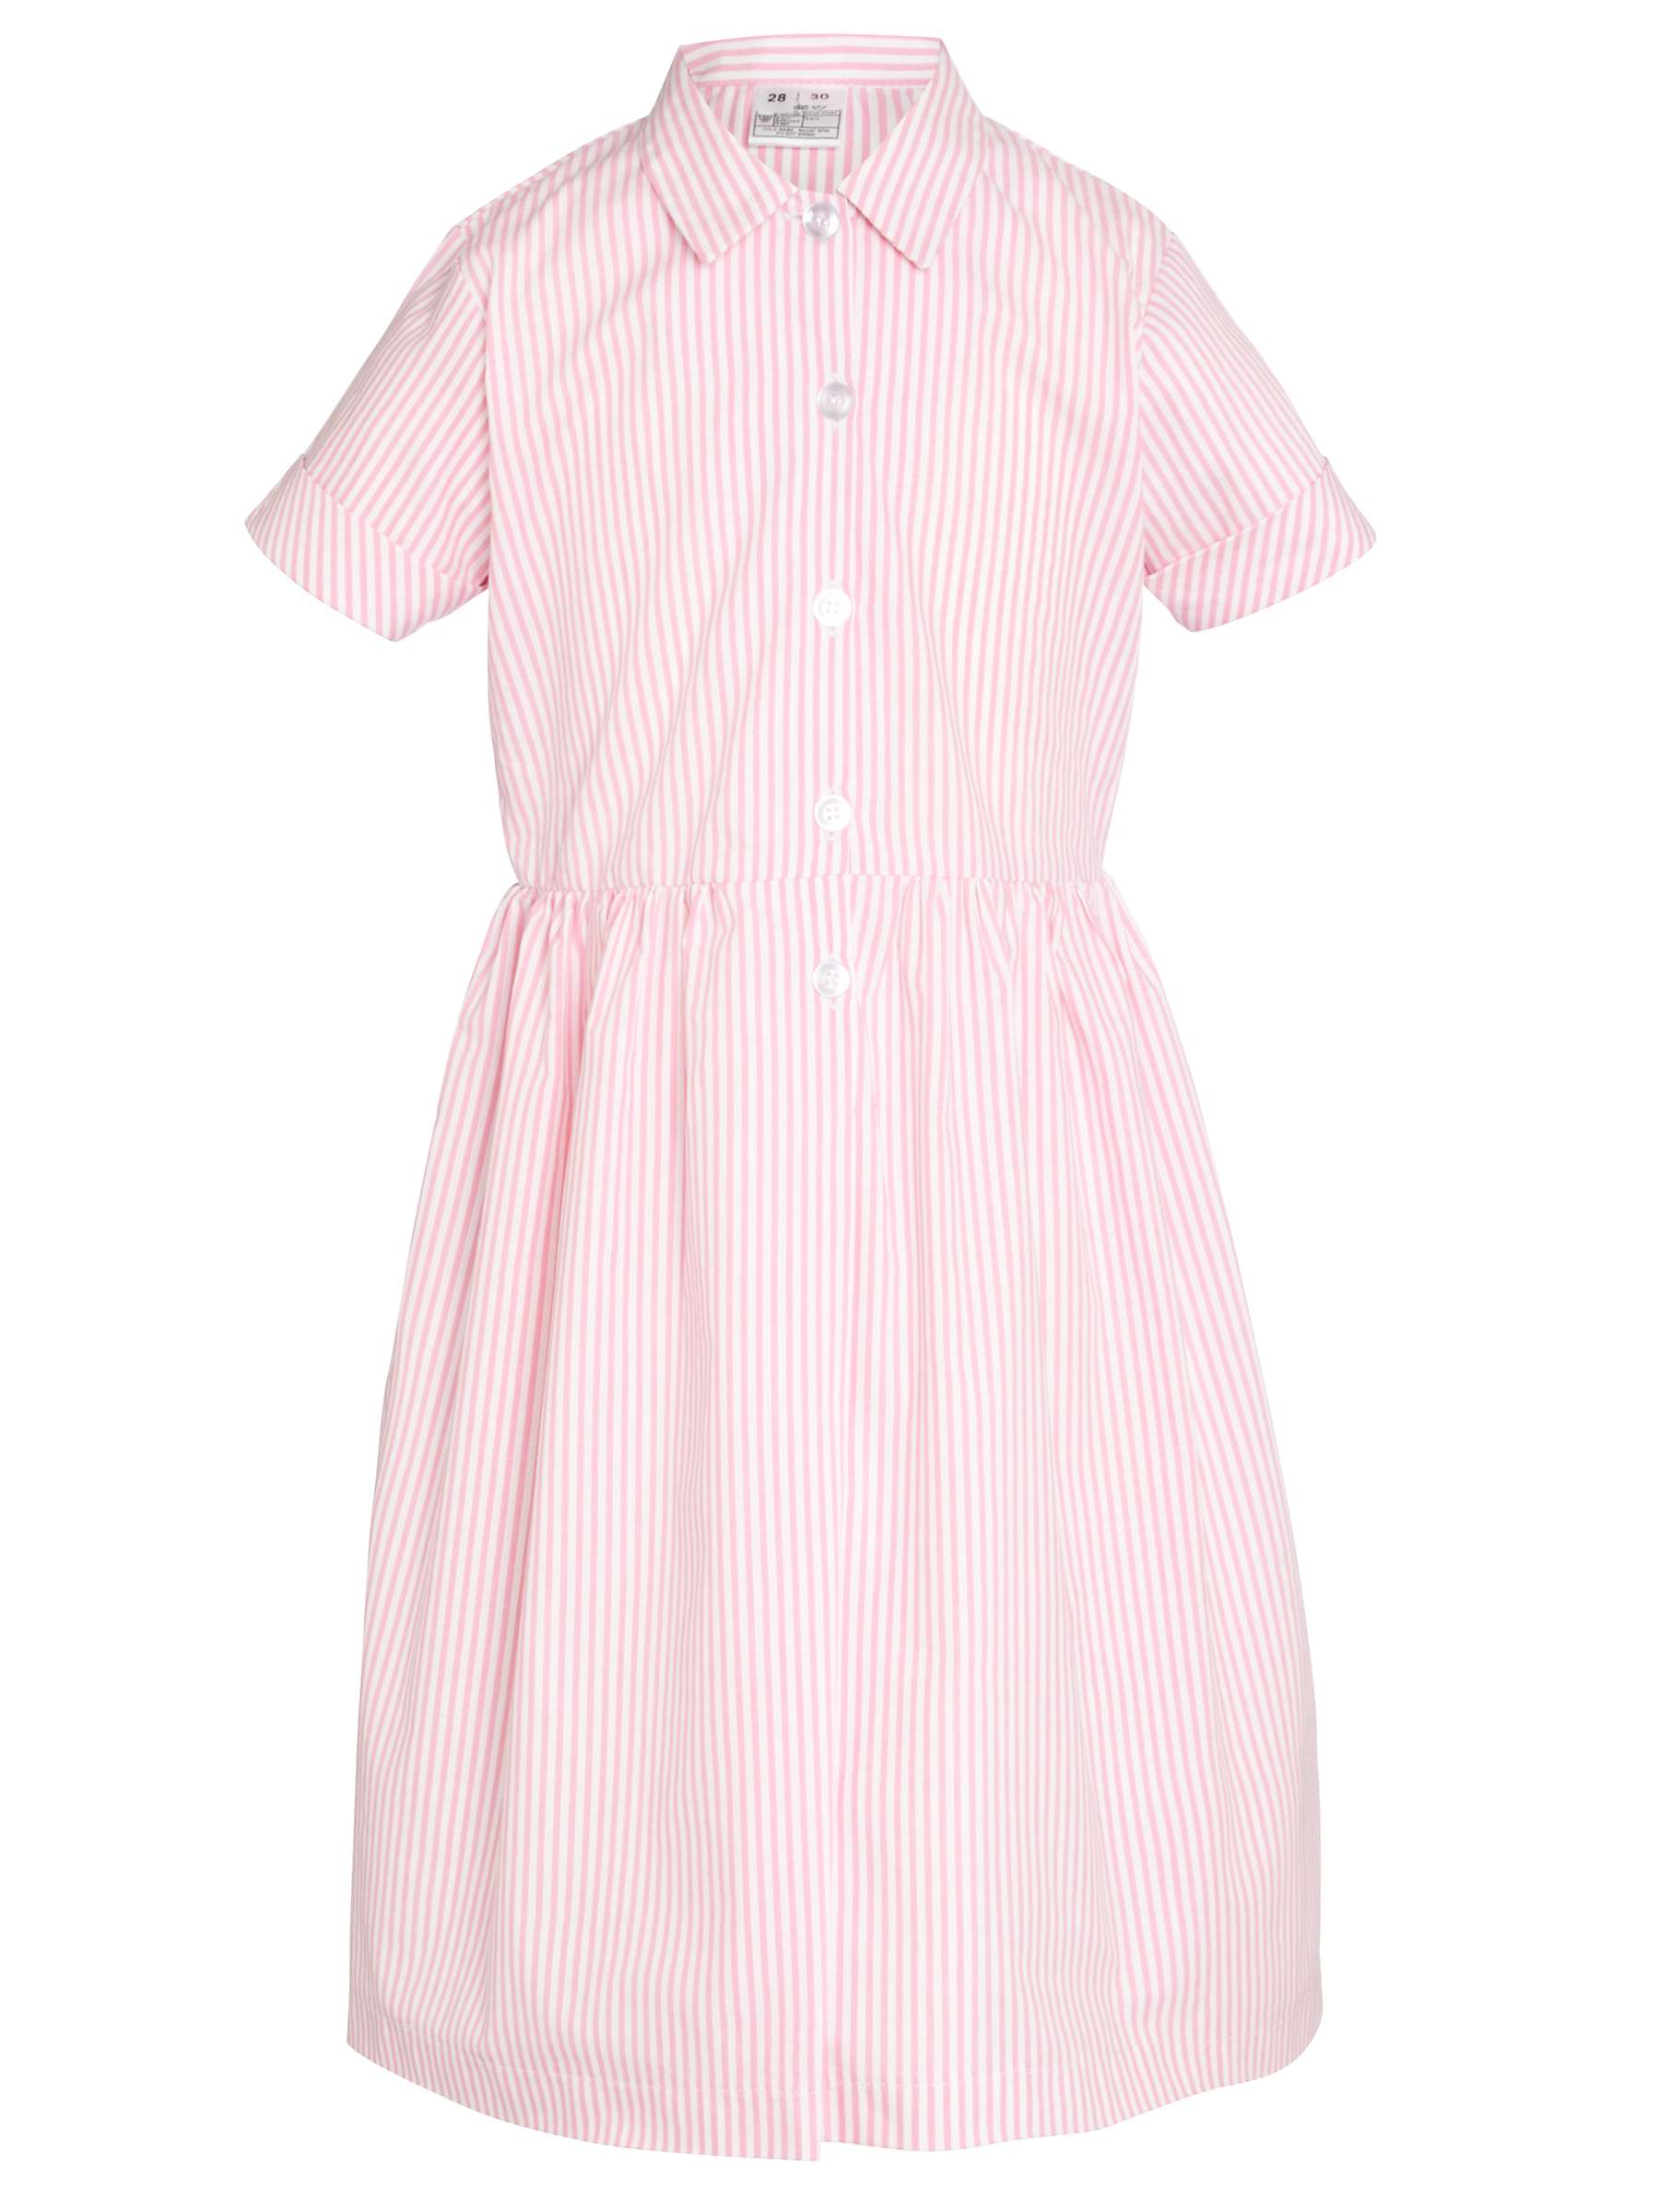 Buy Howell's School Girls' Summer Dress, Pink/White Online at johnlewis.com